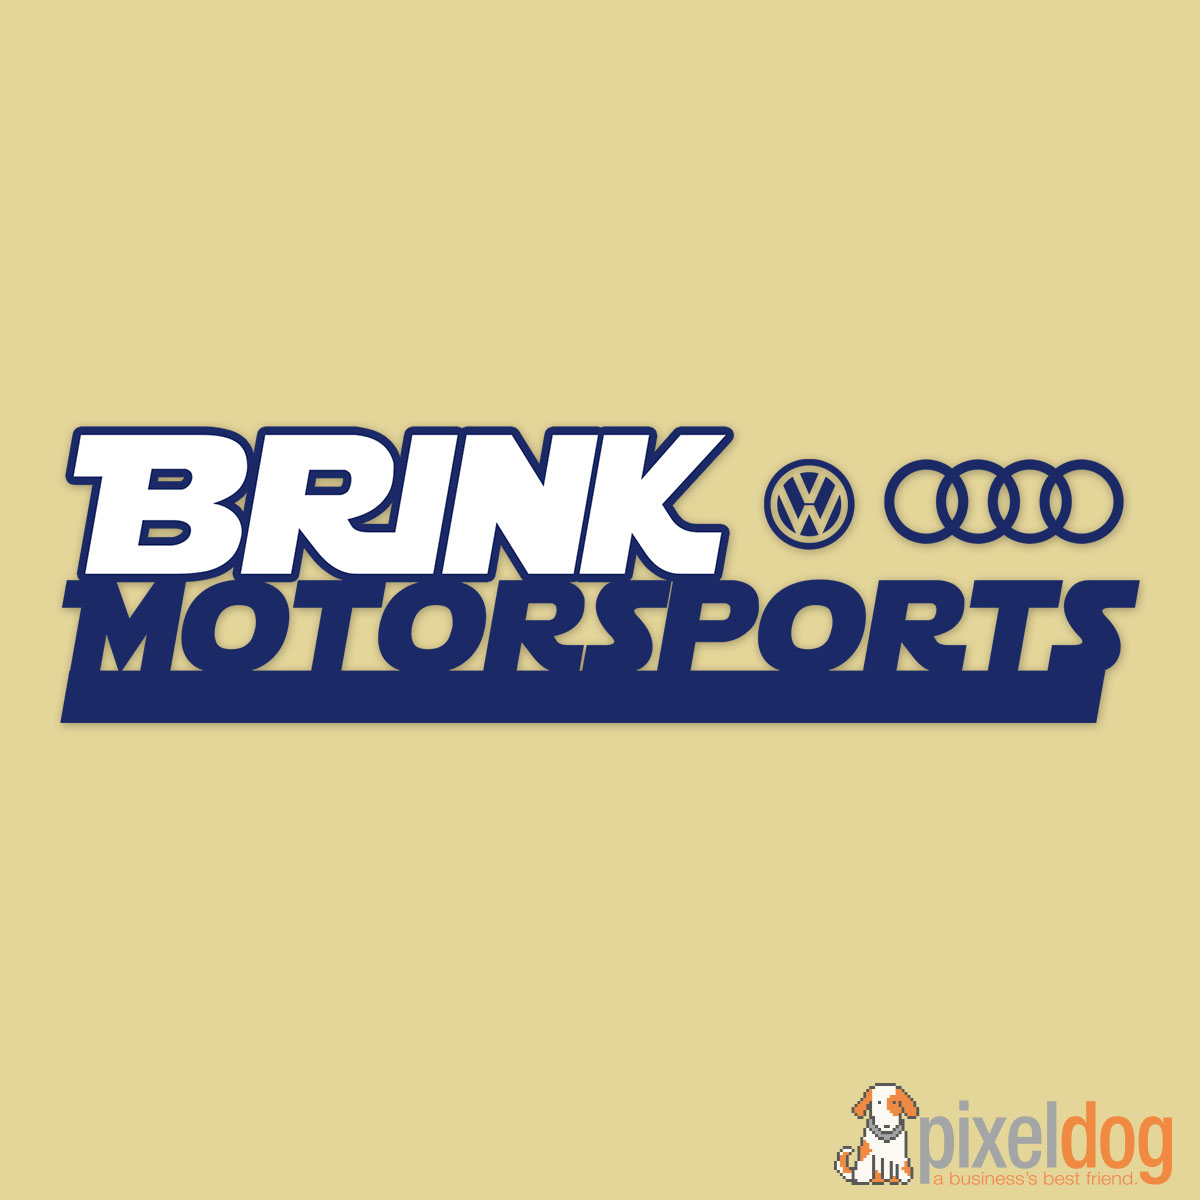 Brink Motorsports (Company)